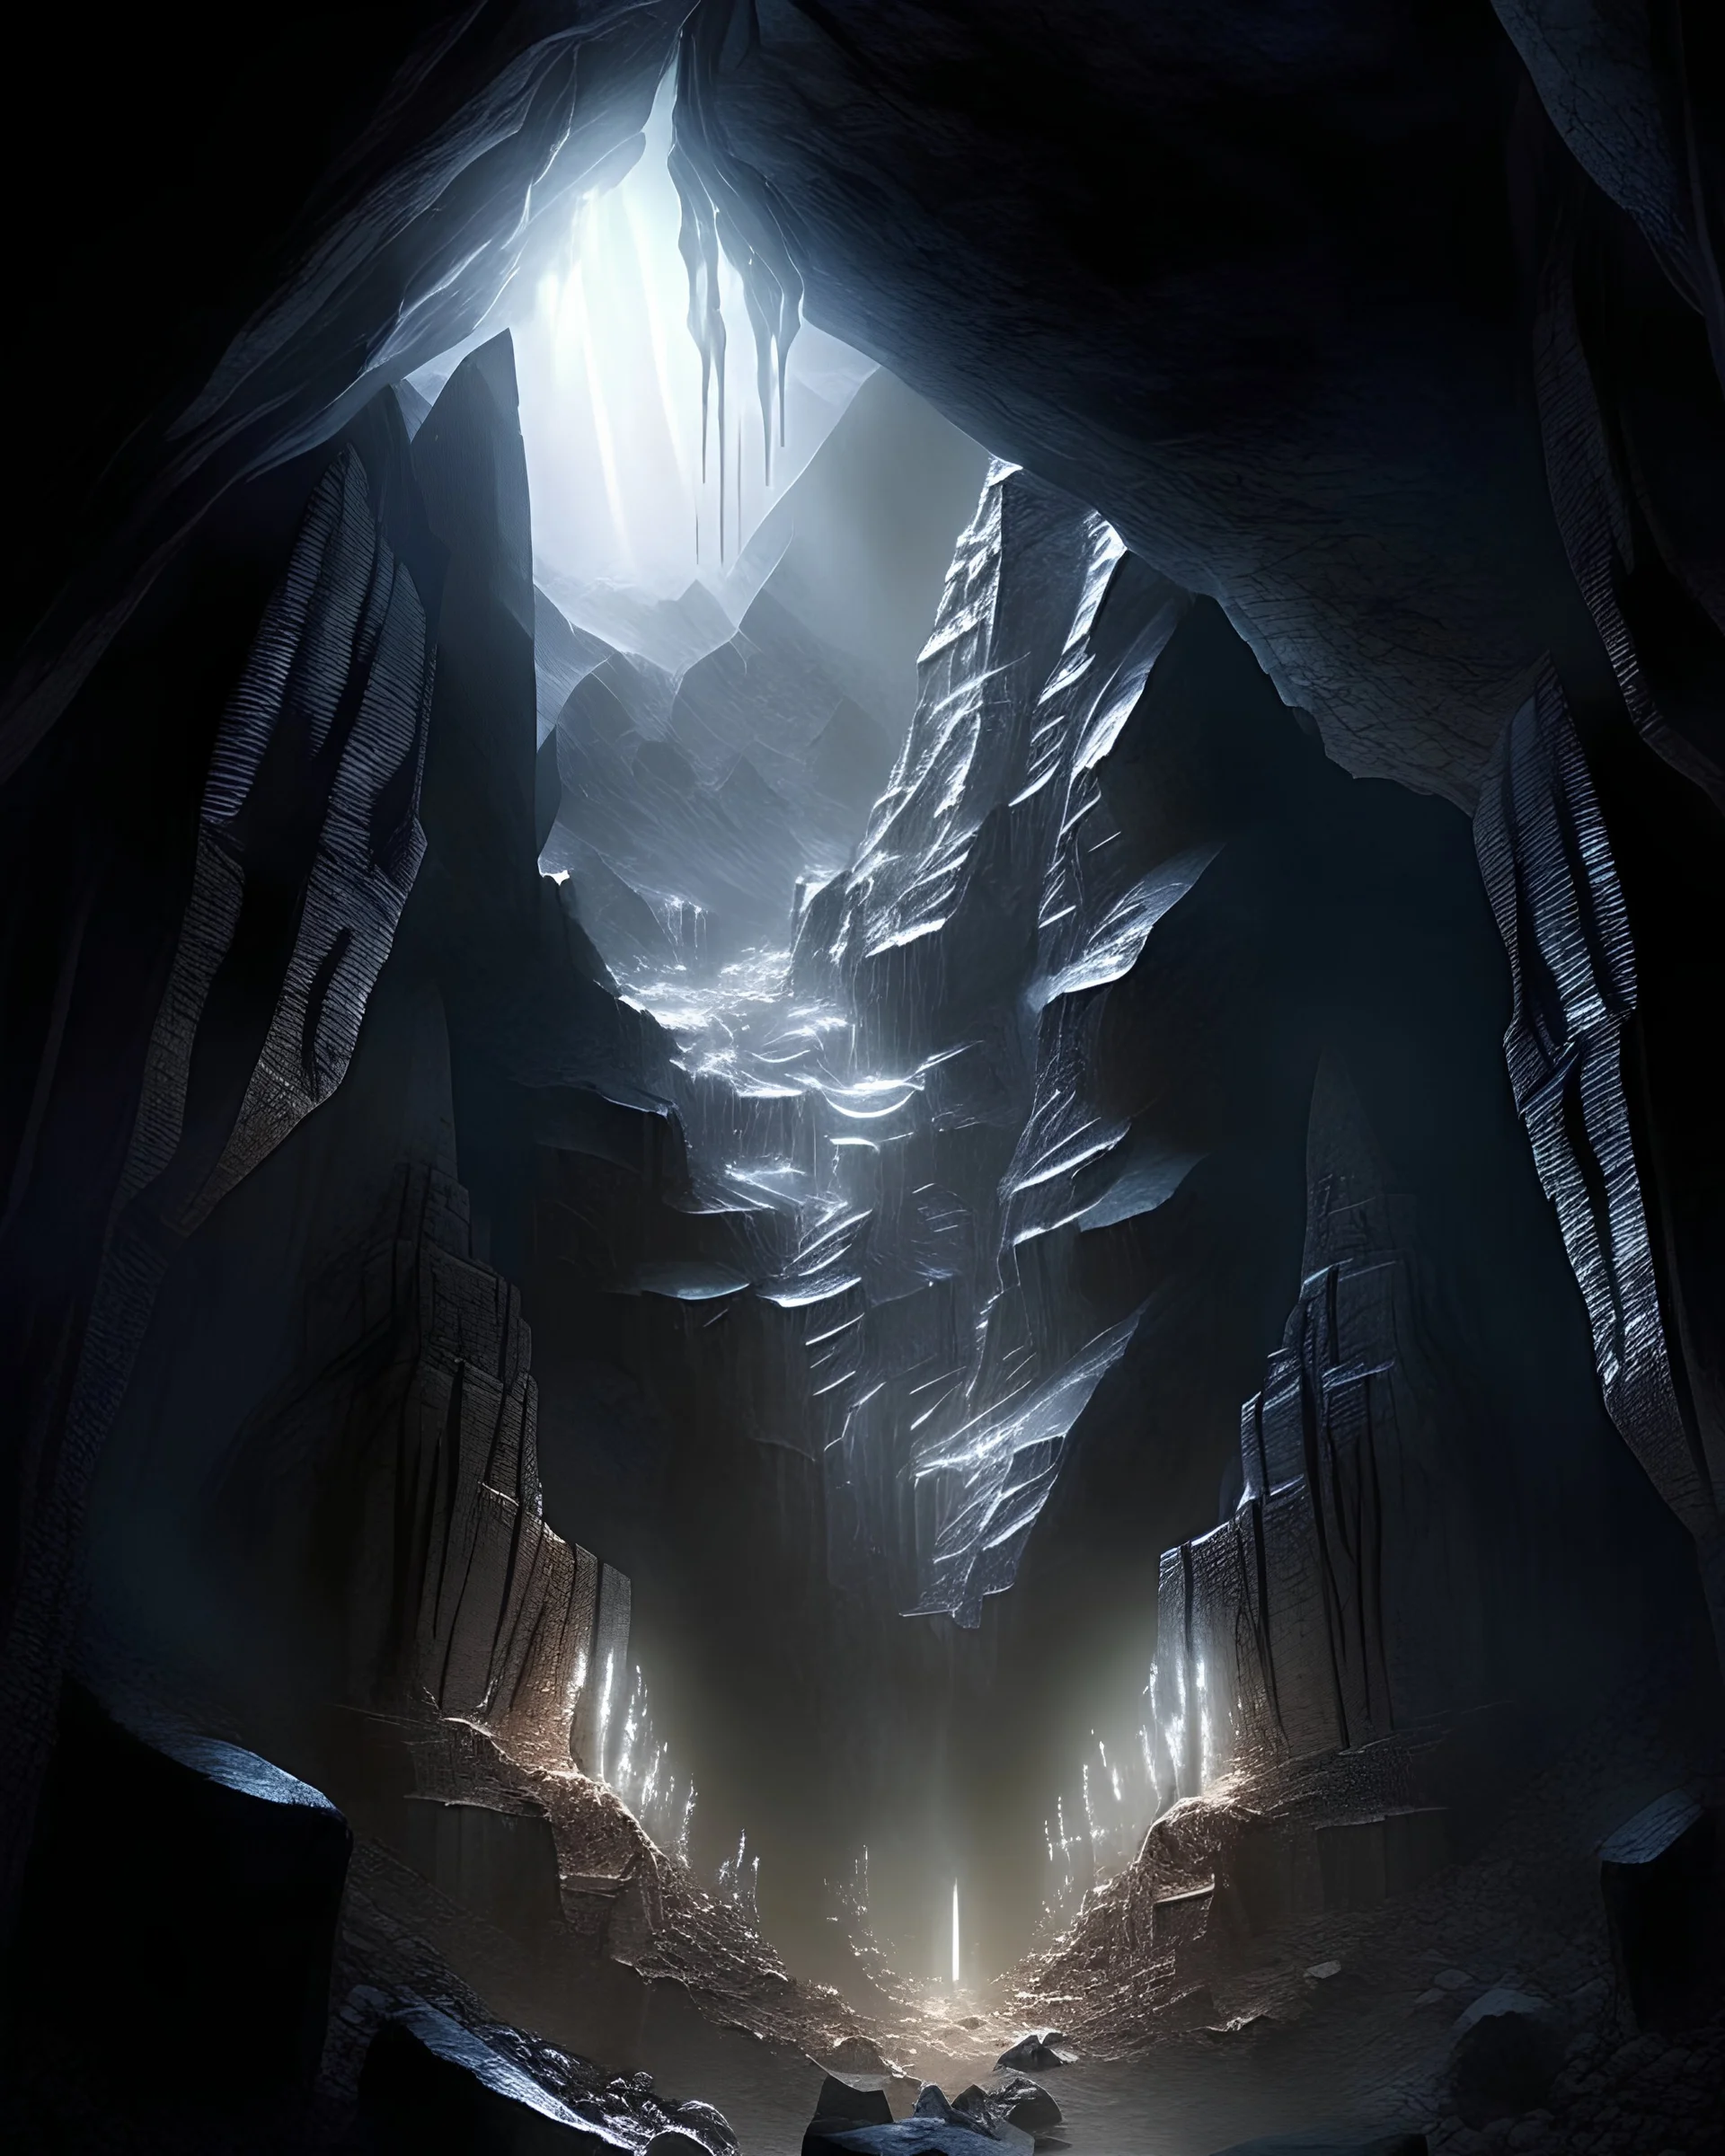 Dwarven mithril mine, vast underground cliffs glowing in silver hue, magical scene, godrays, fantasy cave, sense of awe and wonder, massive chasm